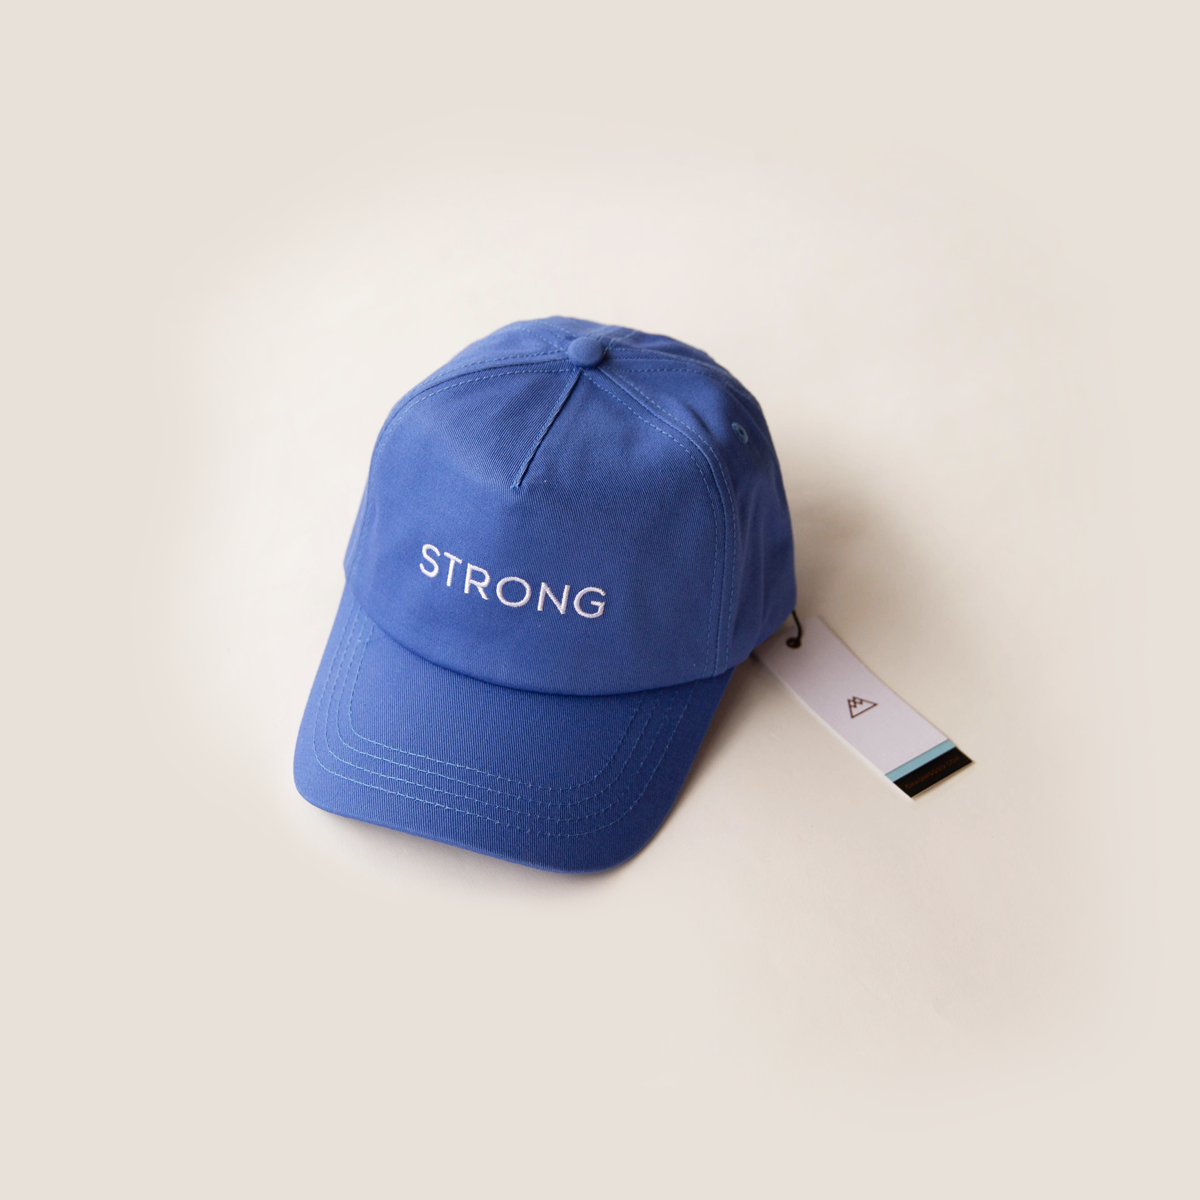 Strong Cap